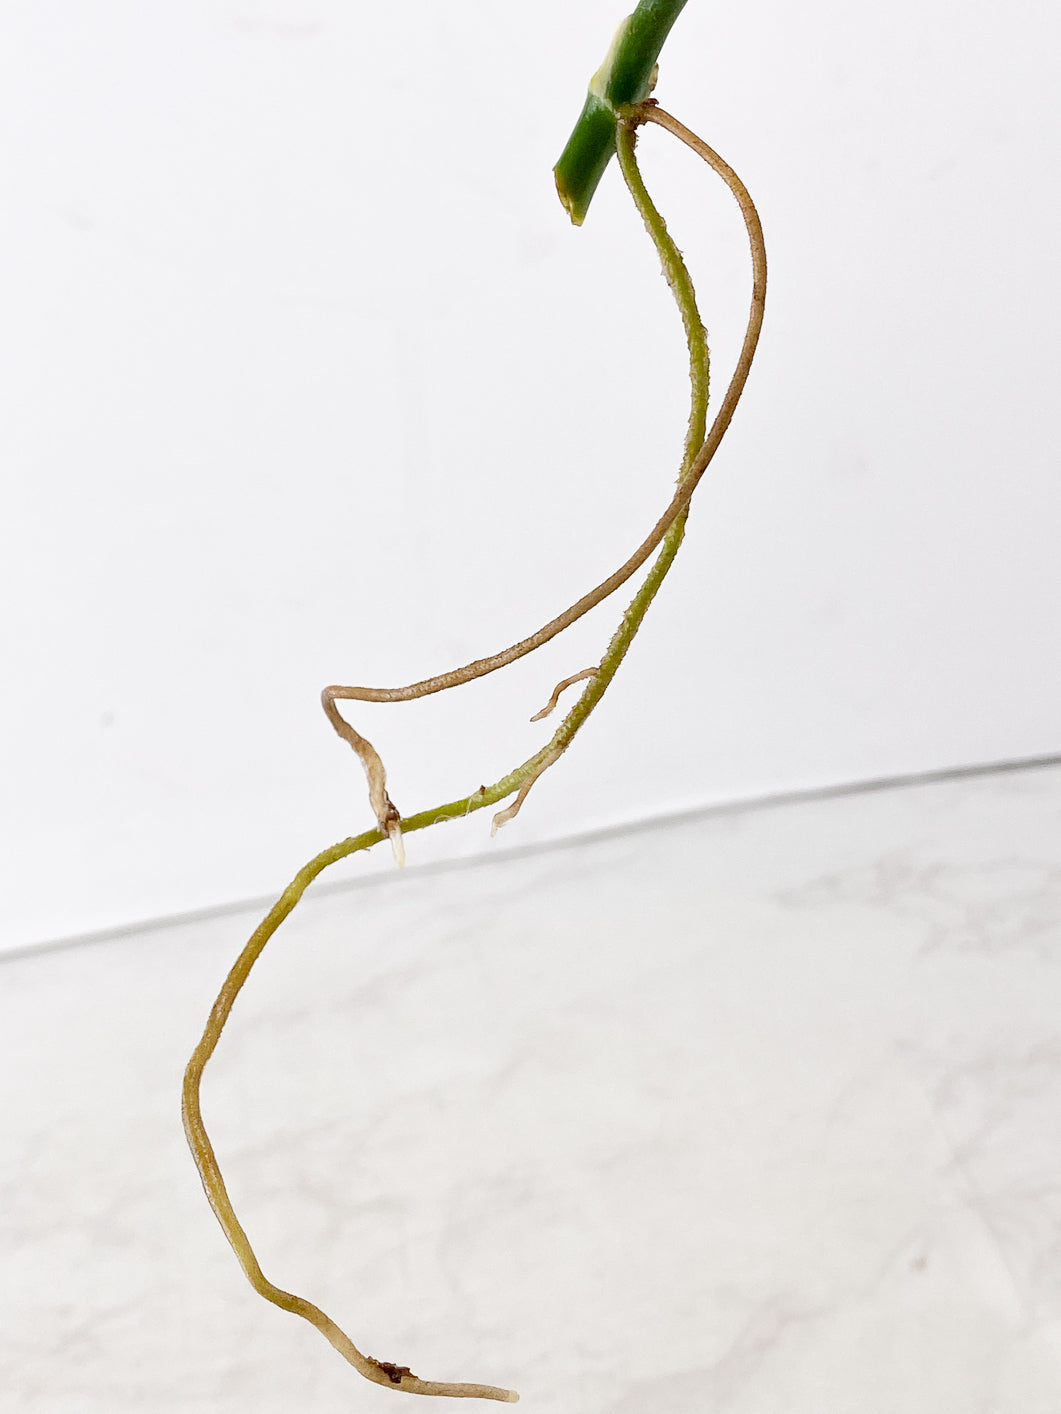 Monstera Adansonii Archipelago 1 leaf with sprout